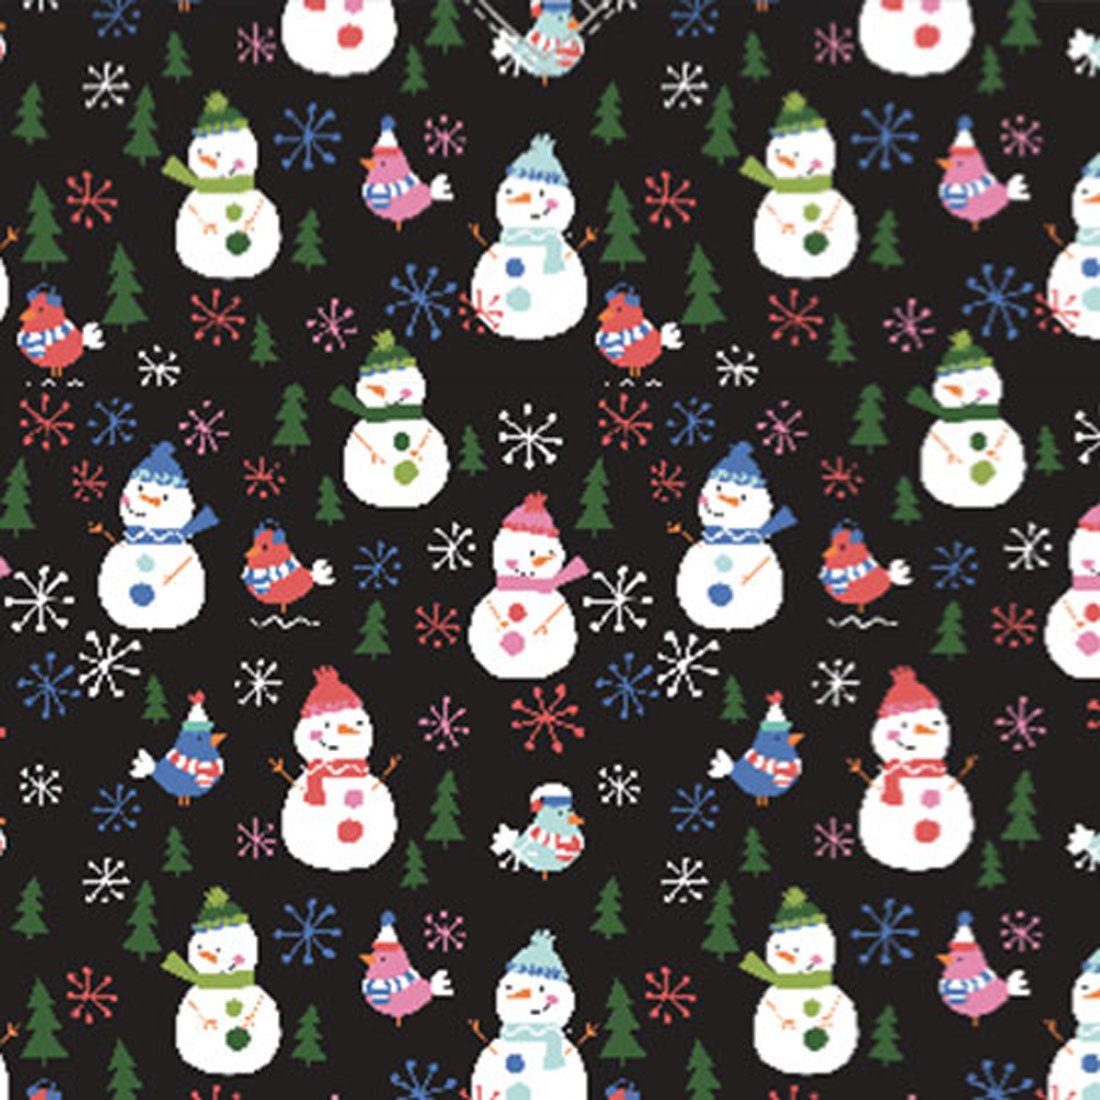 Snowflake Snowman Med Couture Print V Neck Scrub Top MC8564 SFSM - Scrubs Select